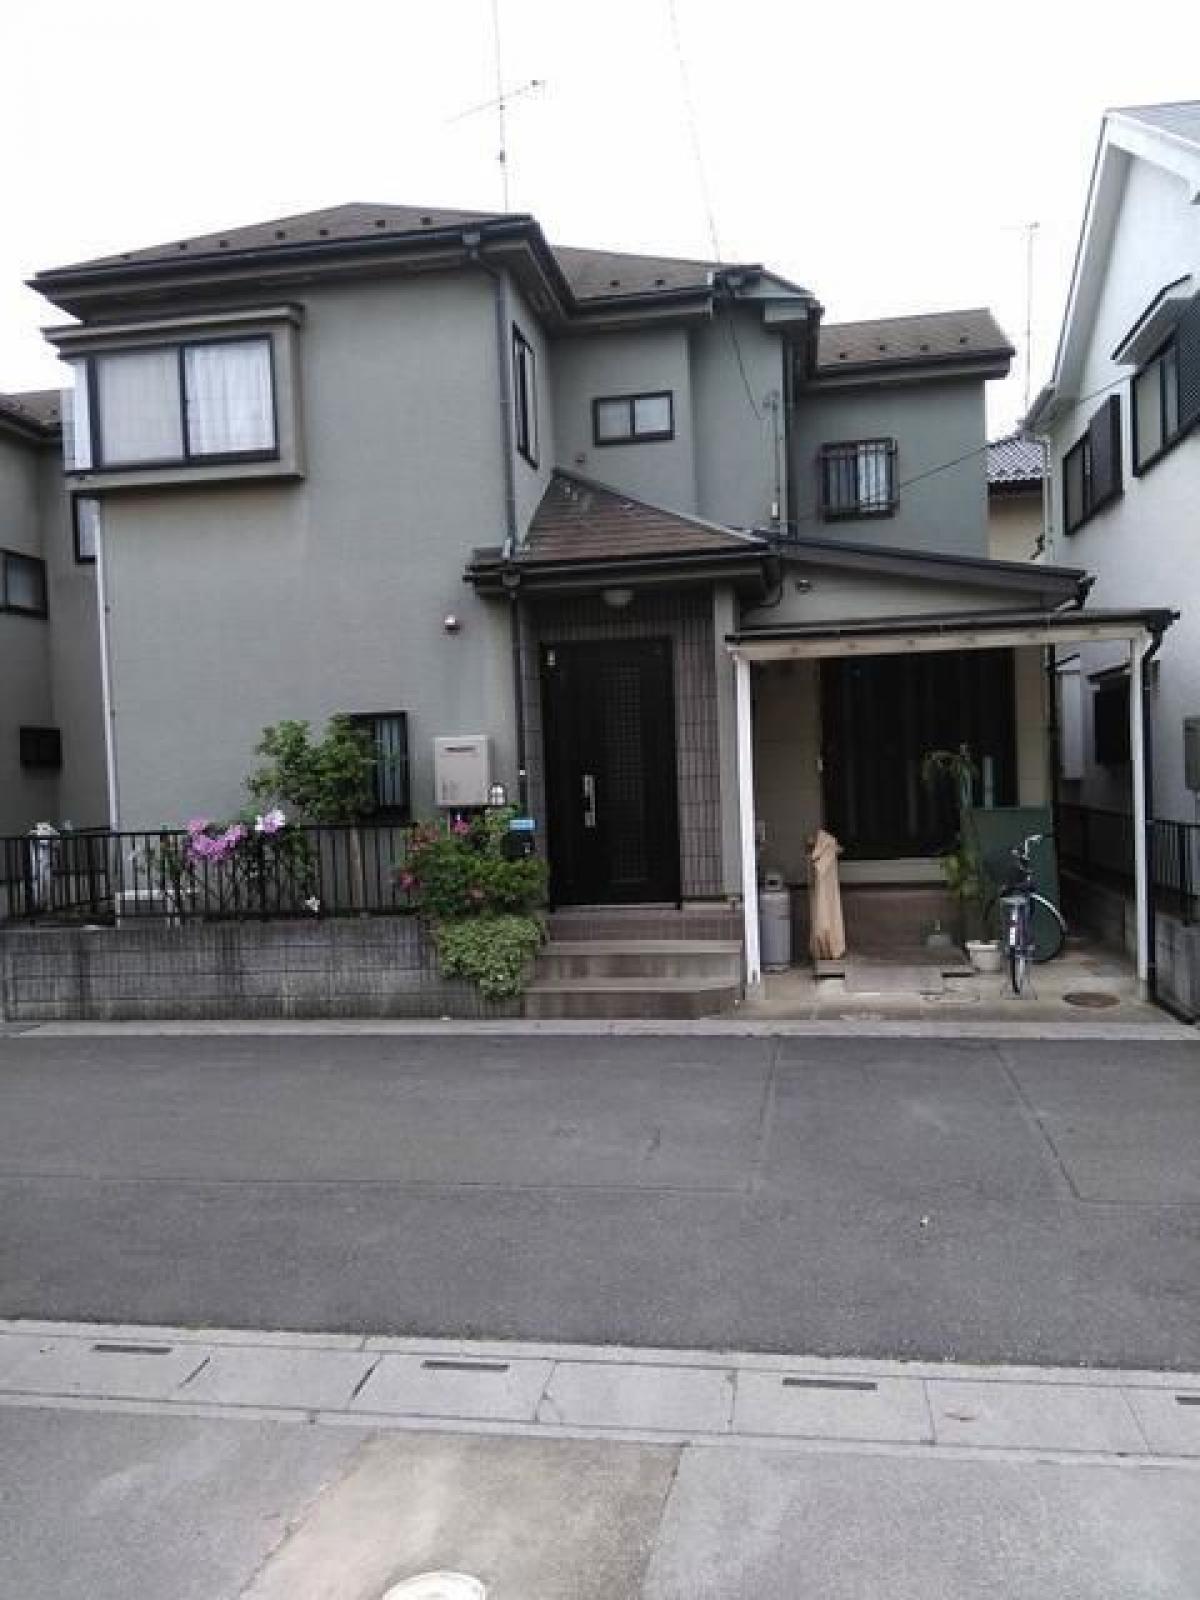 Picture of Home For Sale in Konosu Shi, Saitama, Japan